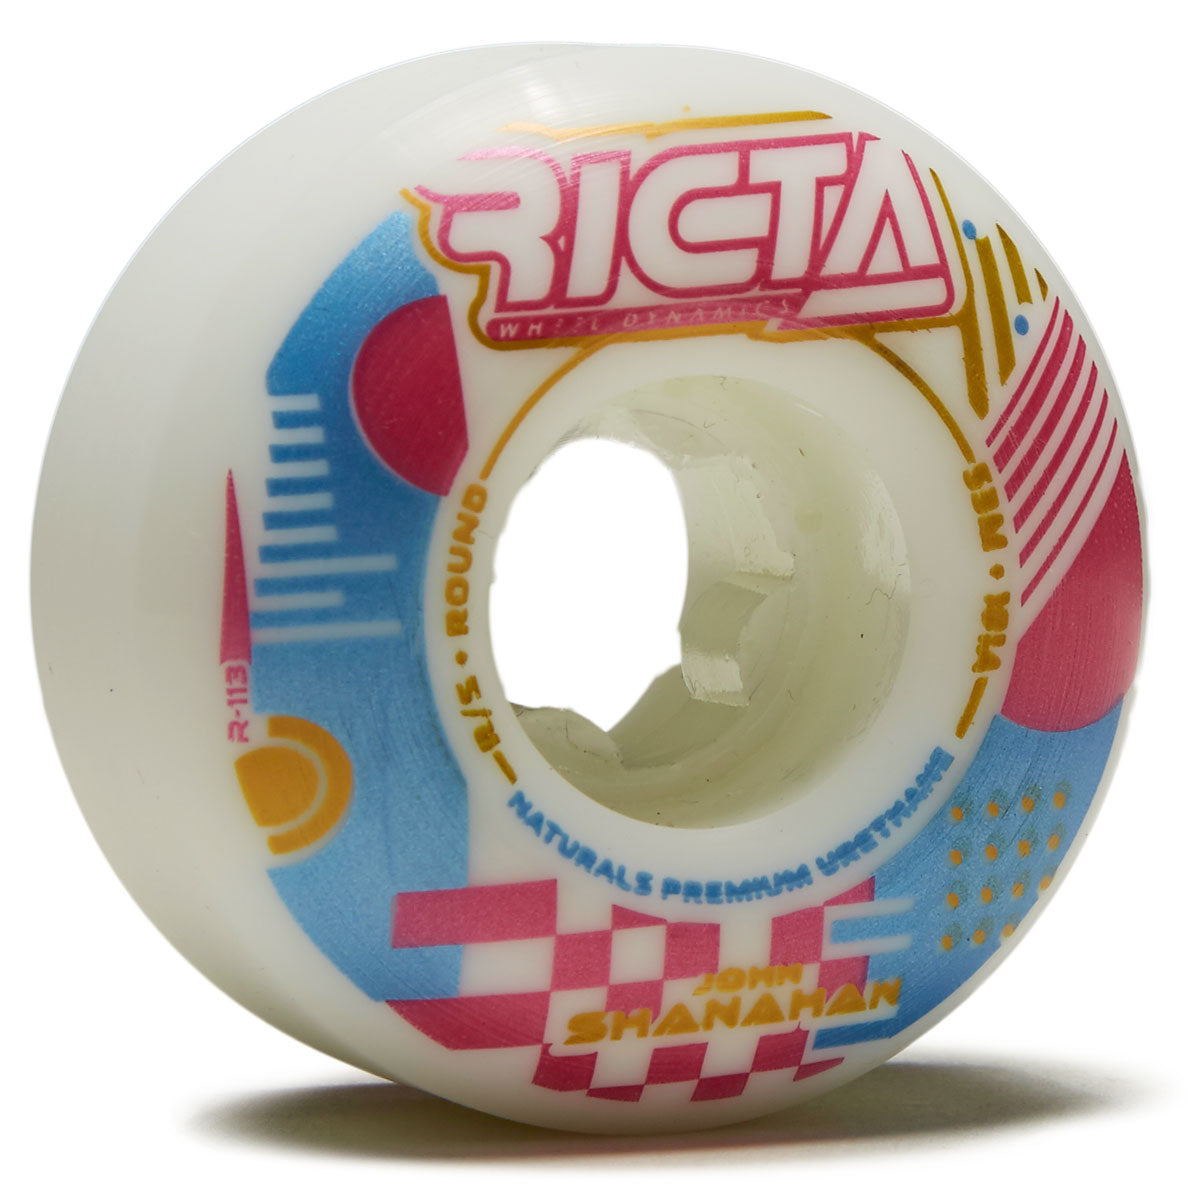 Ricta Shanahan Flux Naturals Round 101a Skateboard Wheels - White - 53mm